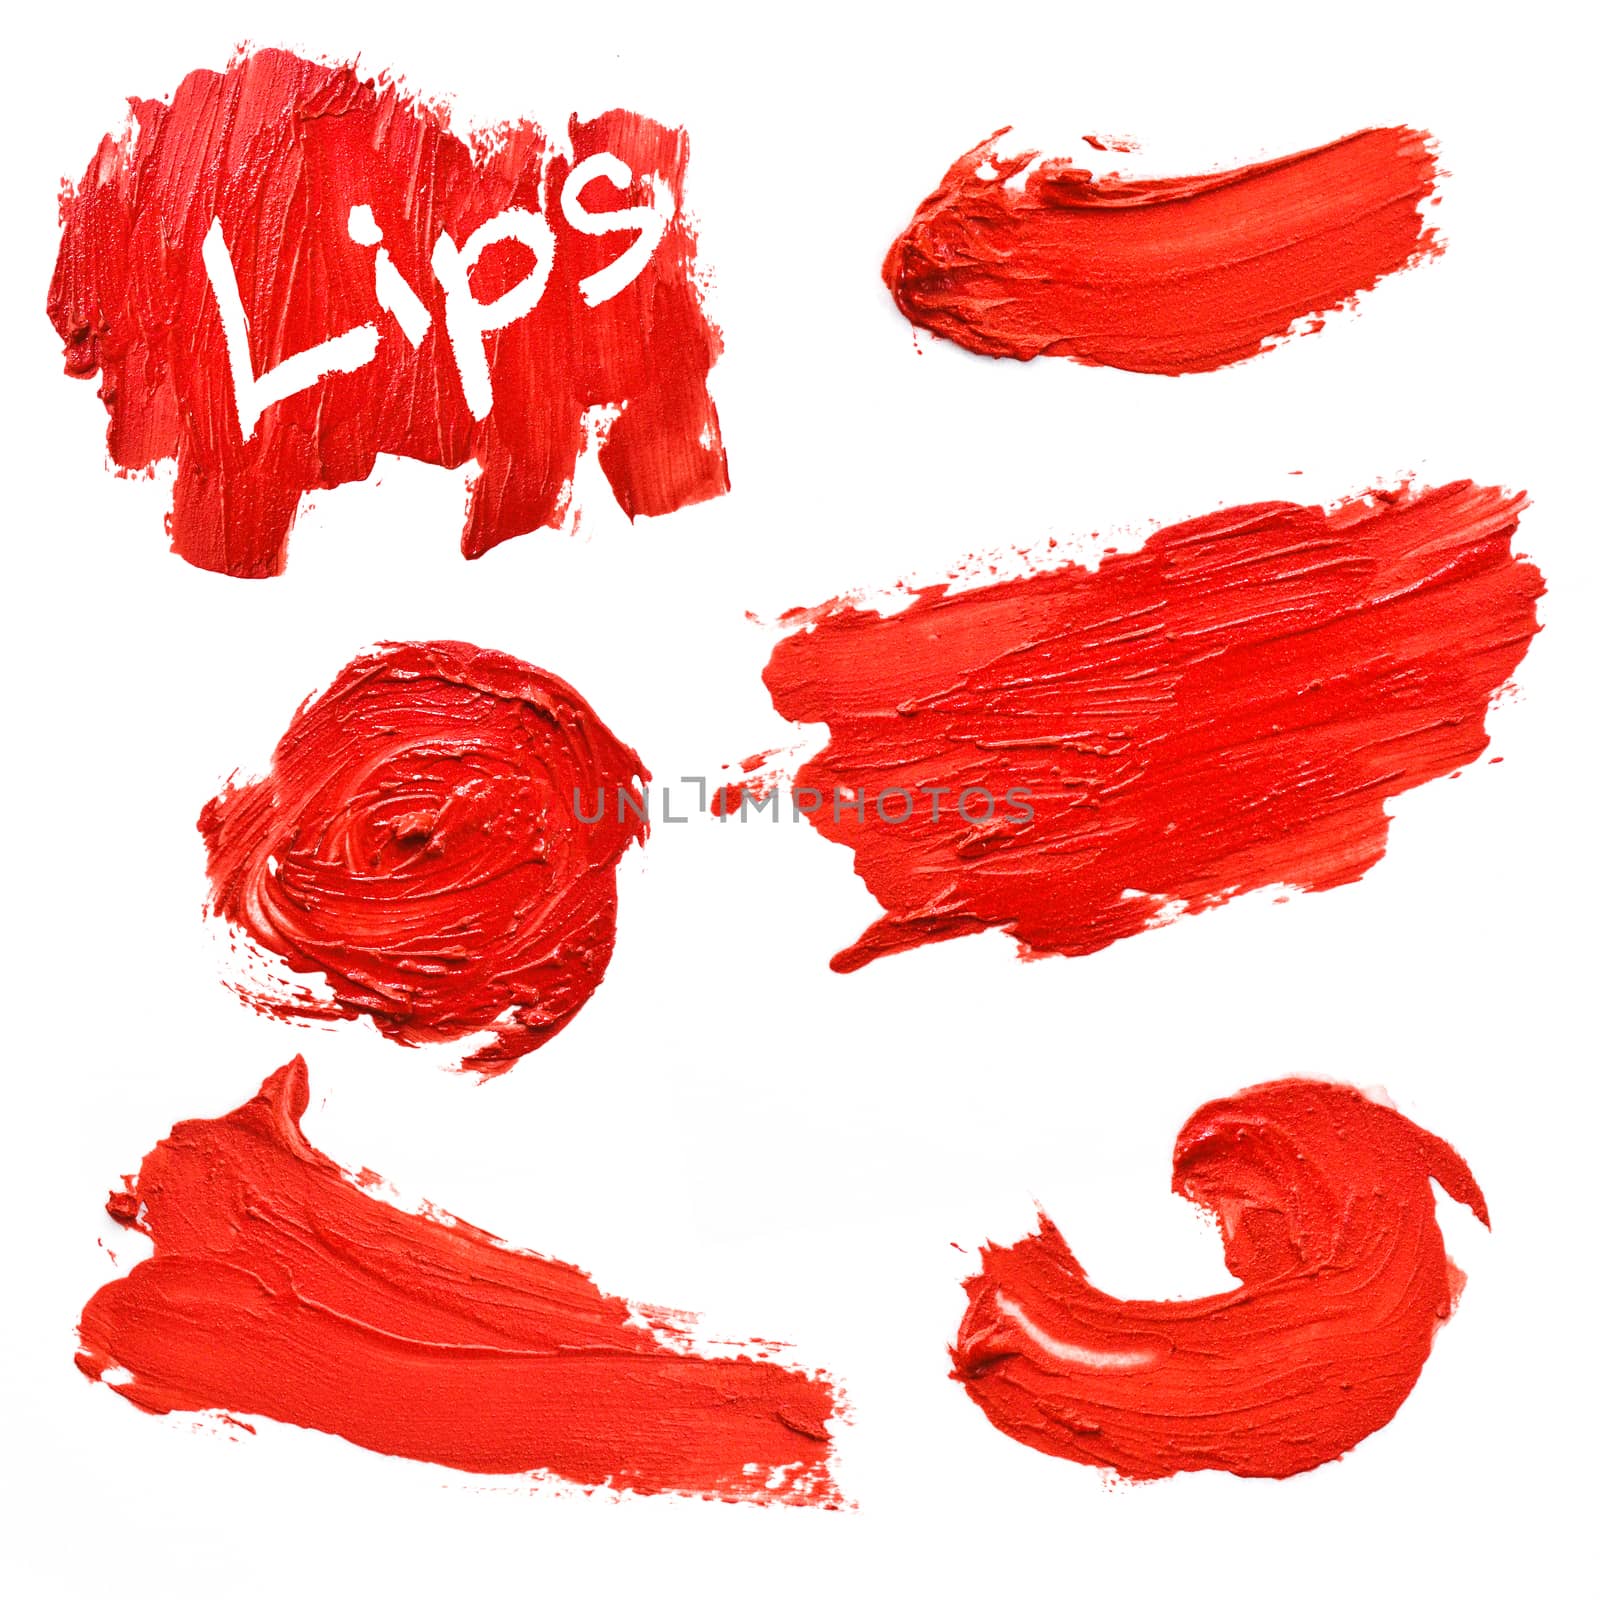 lipstick smudged on white background